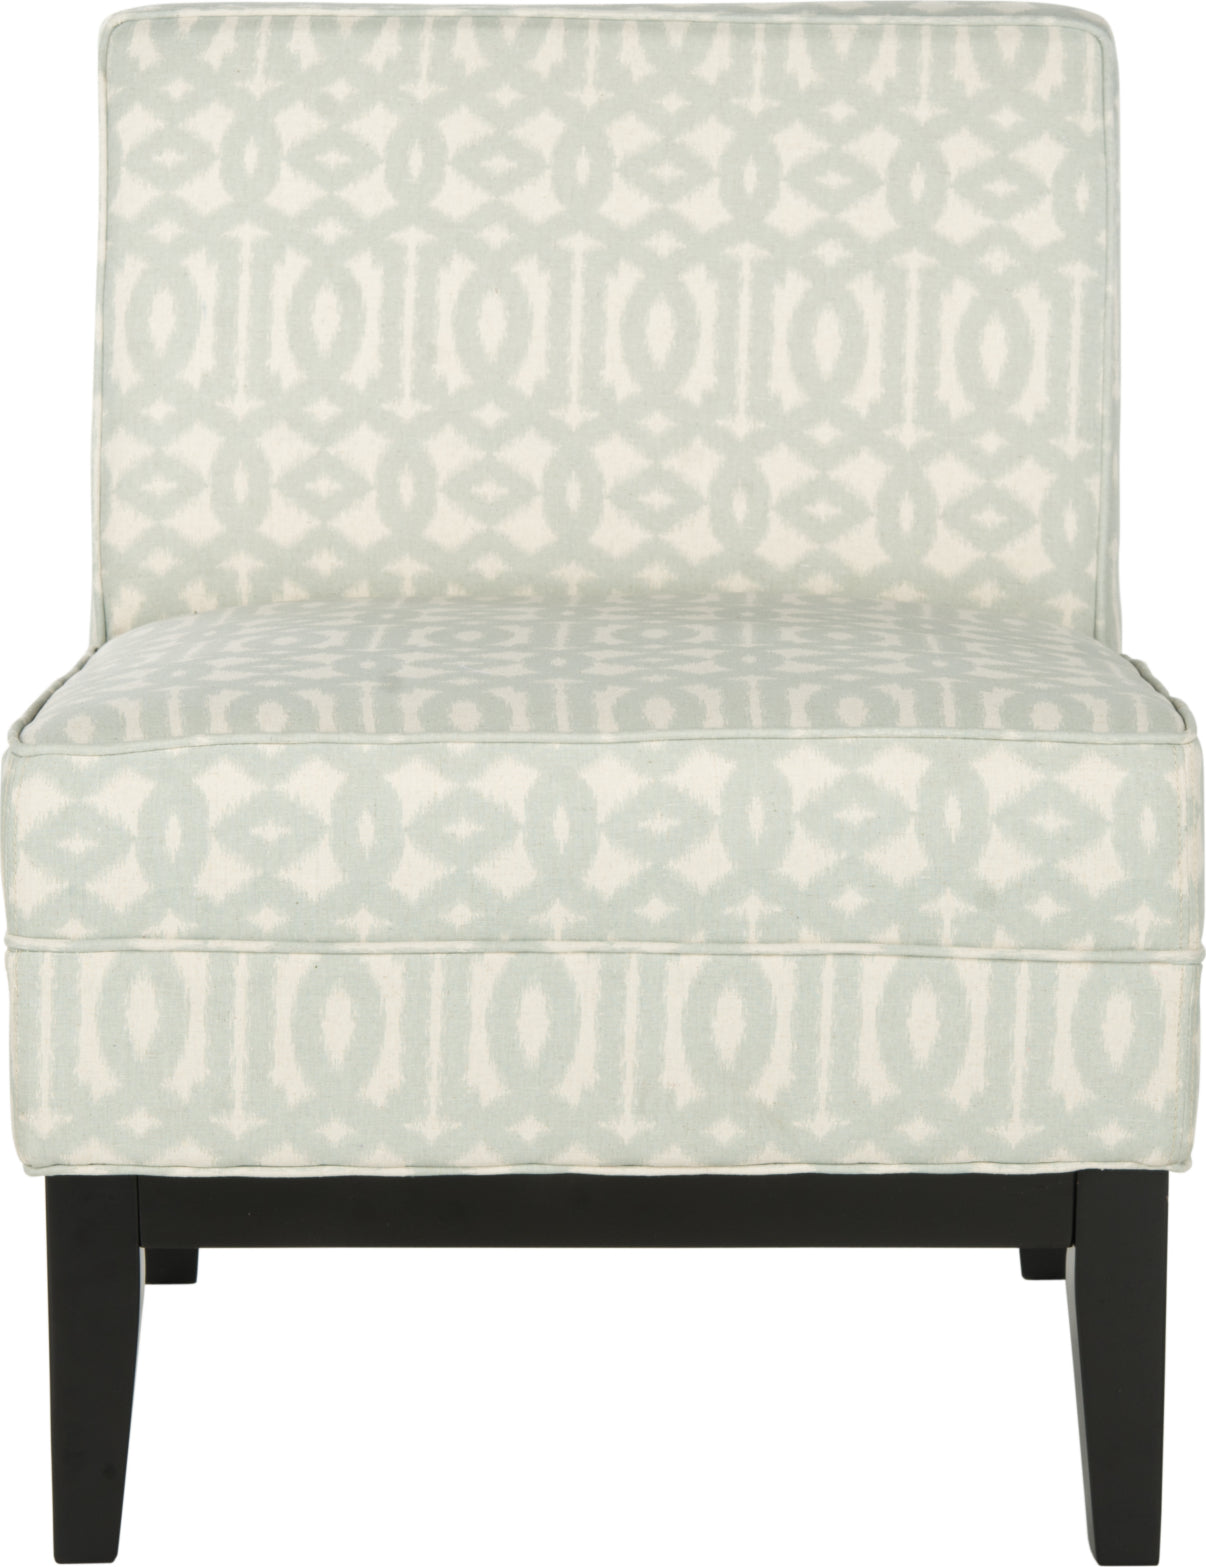 Safavieh Armond Chair Silver and Cream Furniture main image